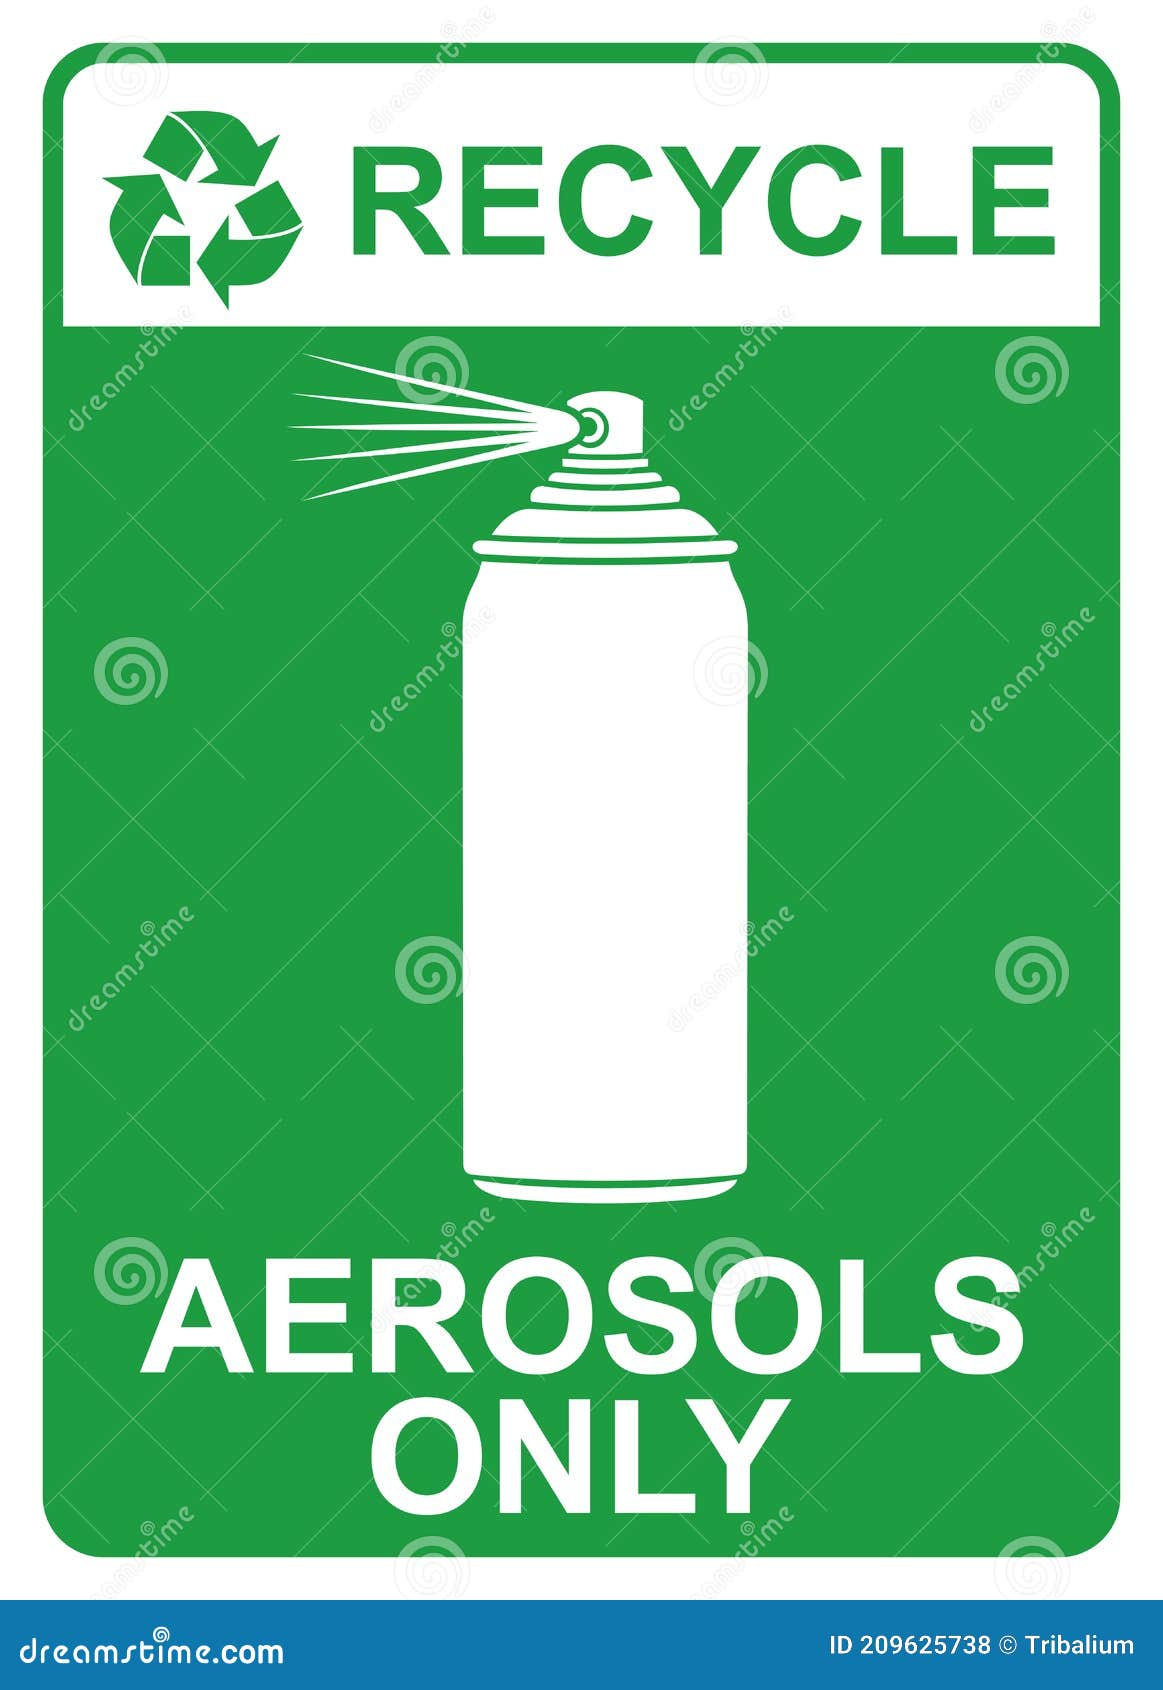 Aerosols & Aerosol Can Disposal and Recycling